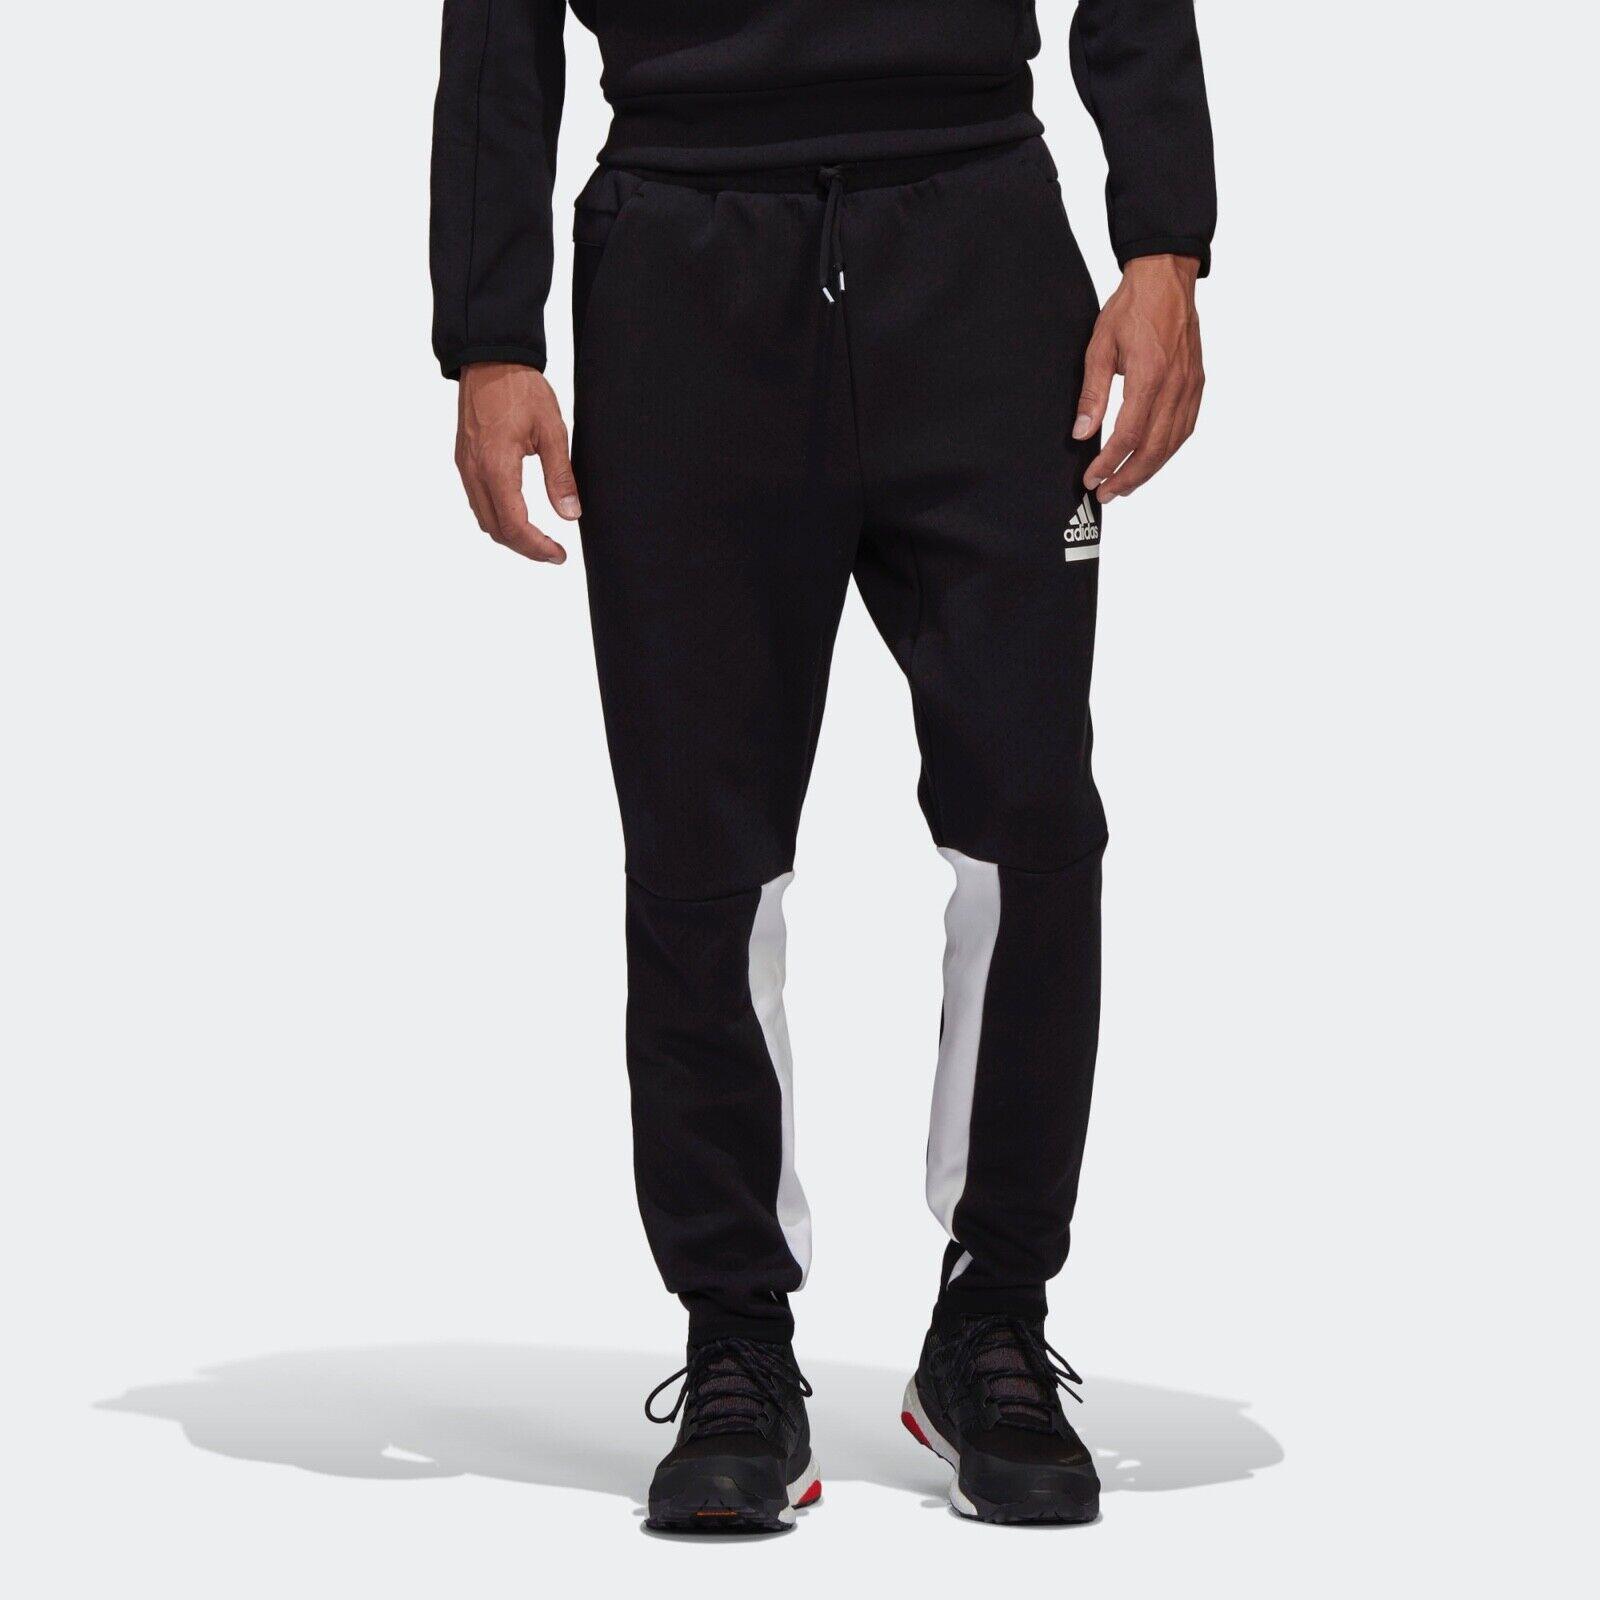 Adidas Z.n.e. Sweatpants Track Pants Joggers Black White Large GM6545 Zne tp